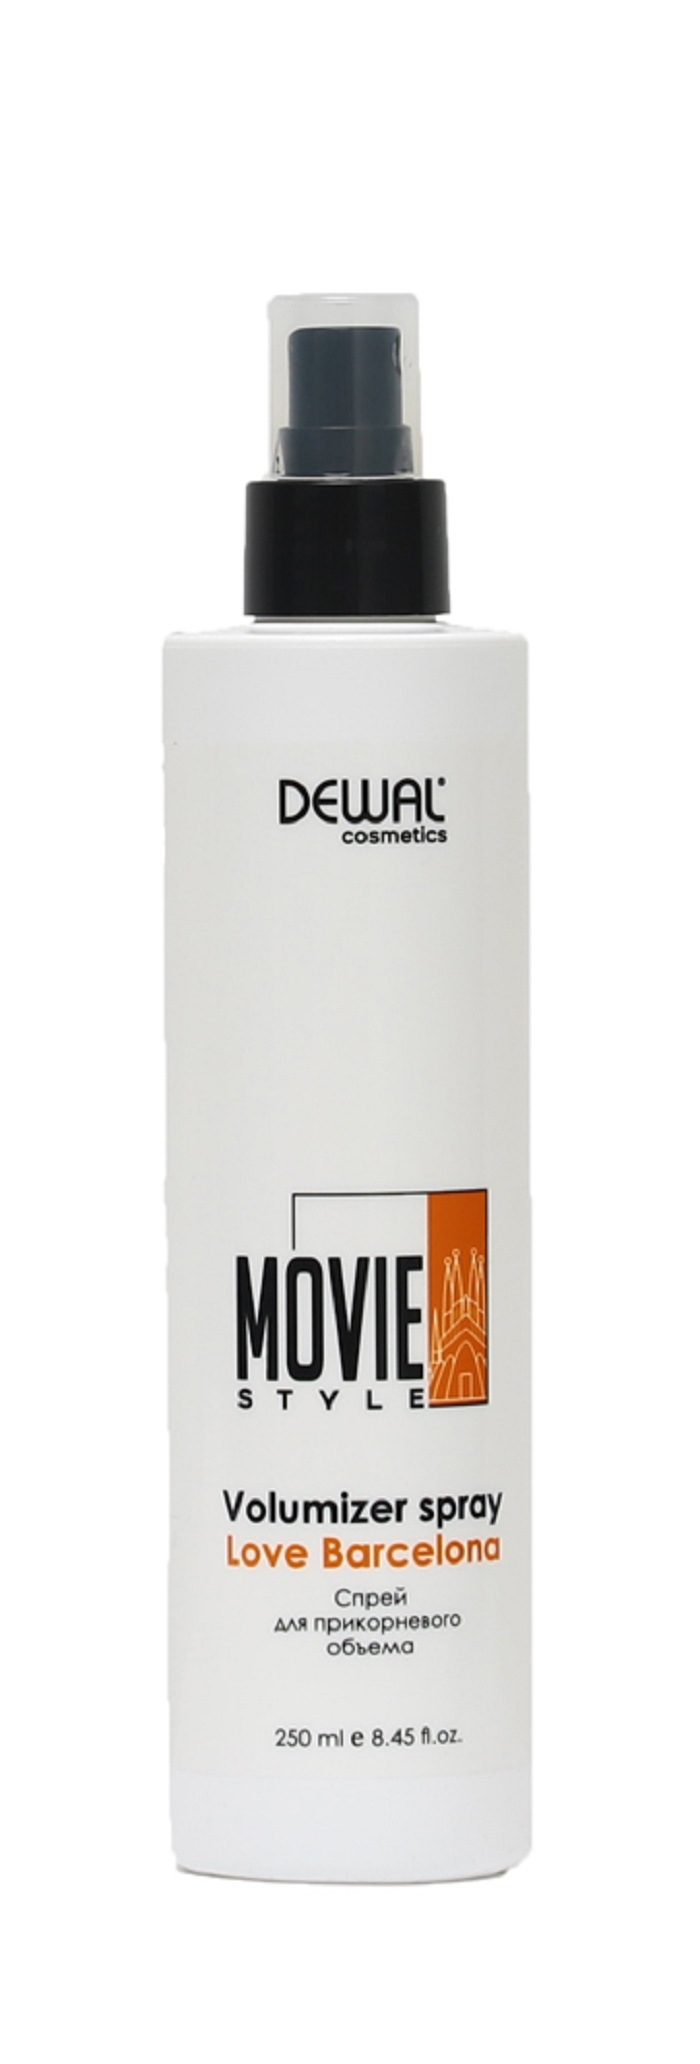 Спрей для волос Dewal Movie Style Love Barcelona, 250 мл dewal pro фен barber style 2200 вт ионизация 2 насадки